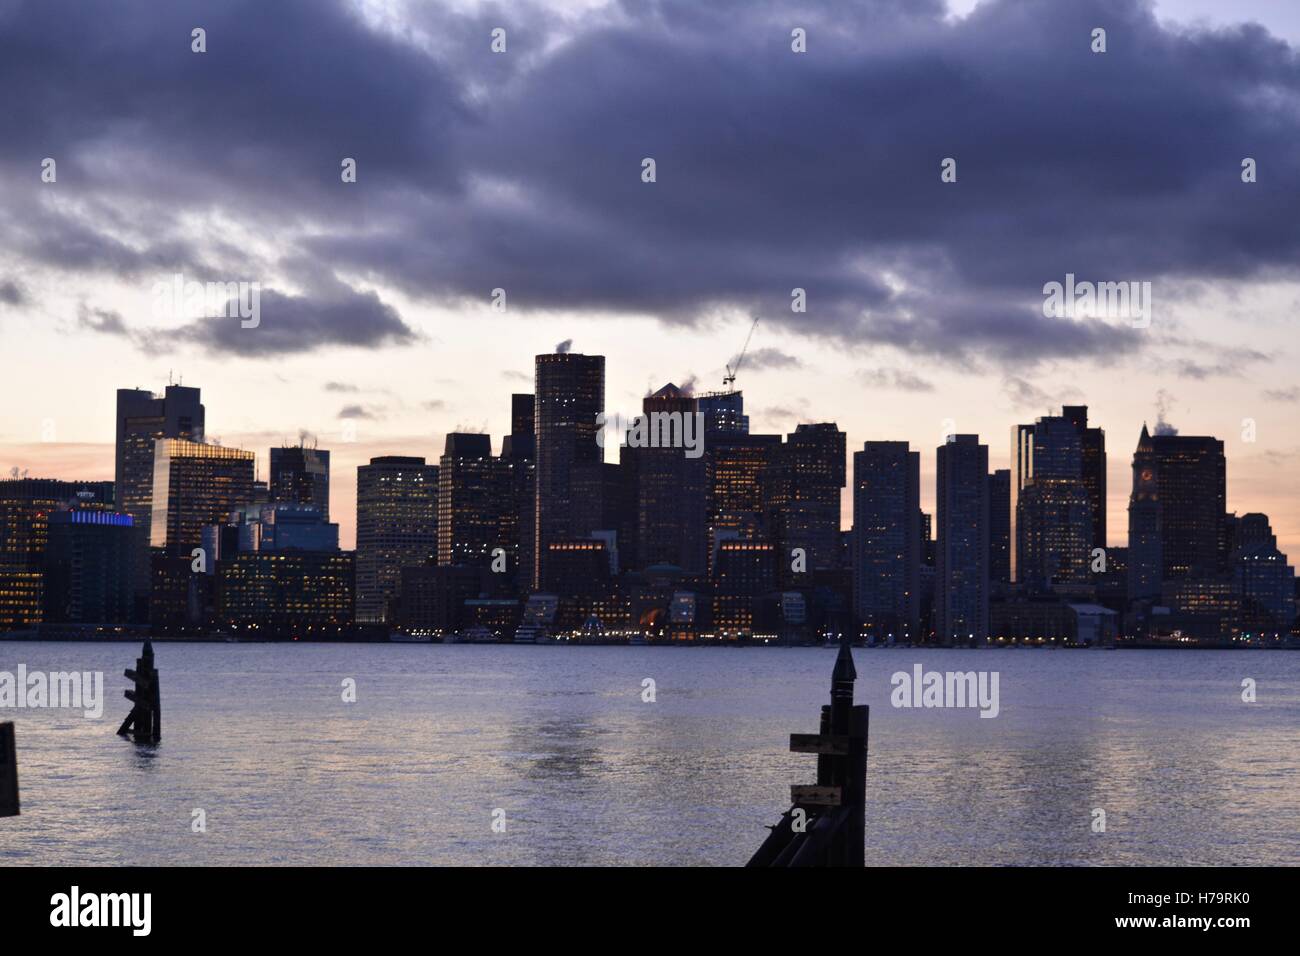 The downtown Boston skyline at sunset, seen from across Boston Harbor. Stock Photo